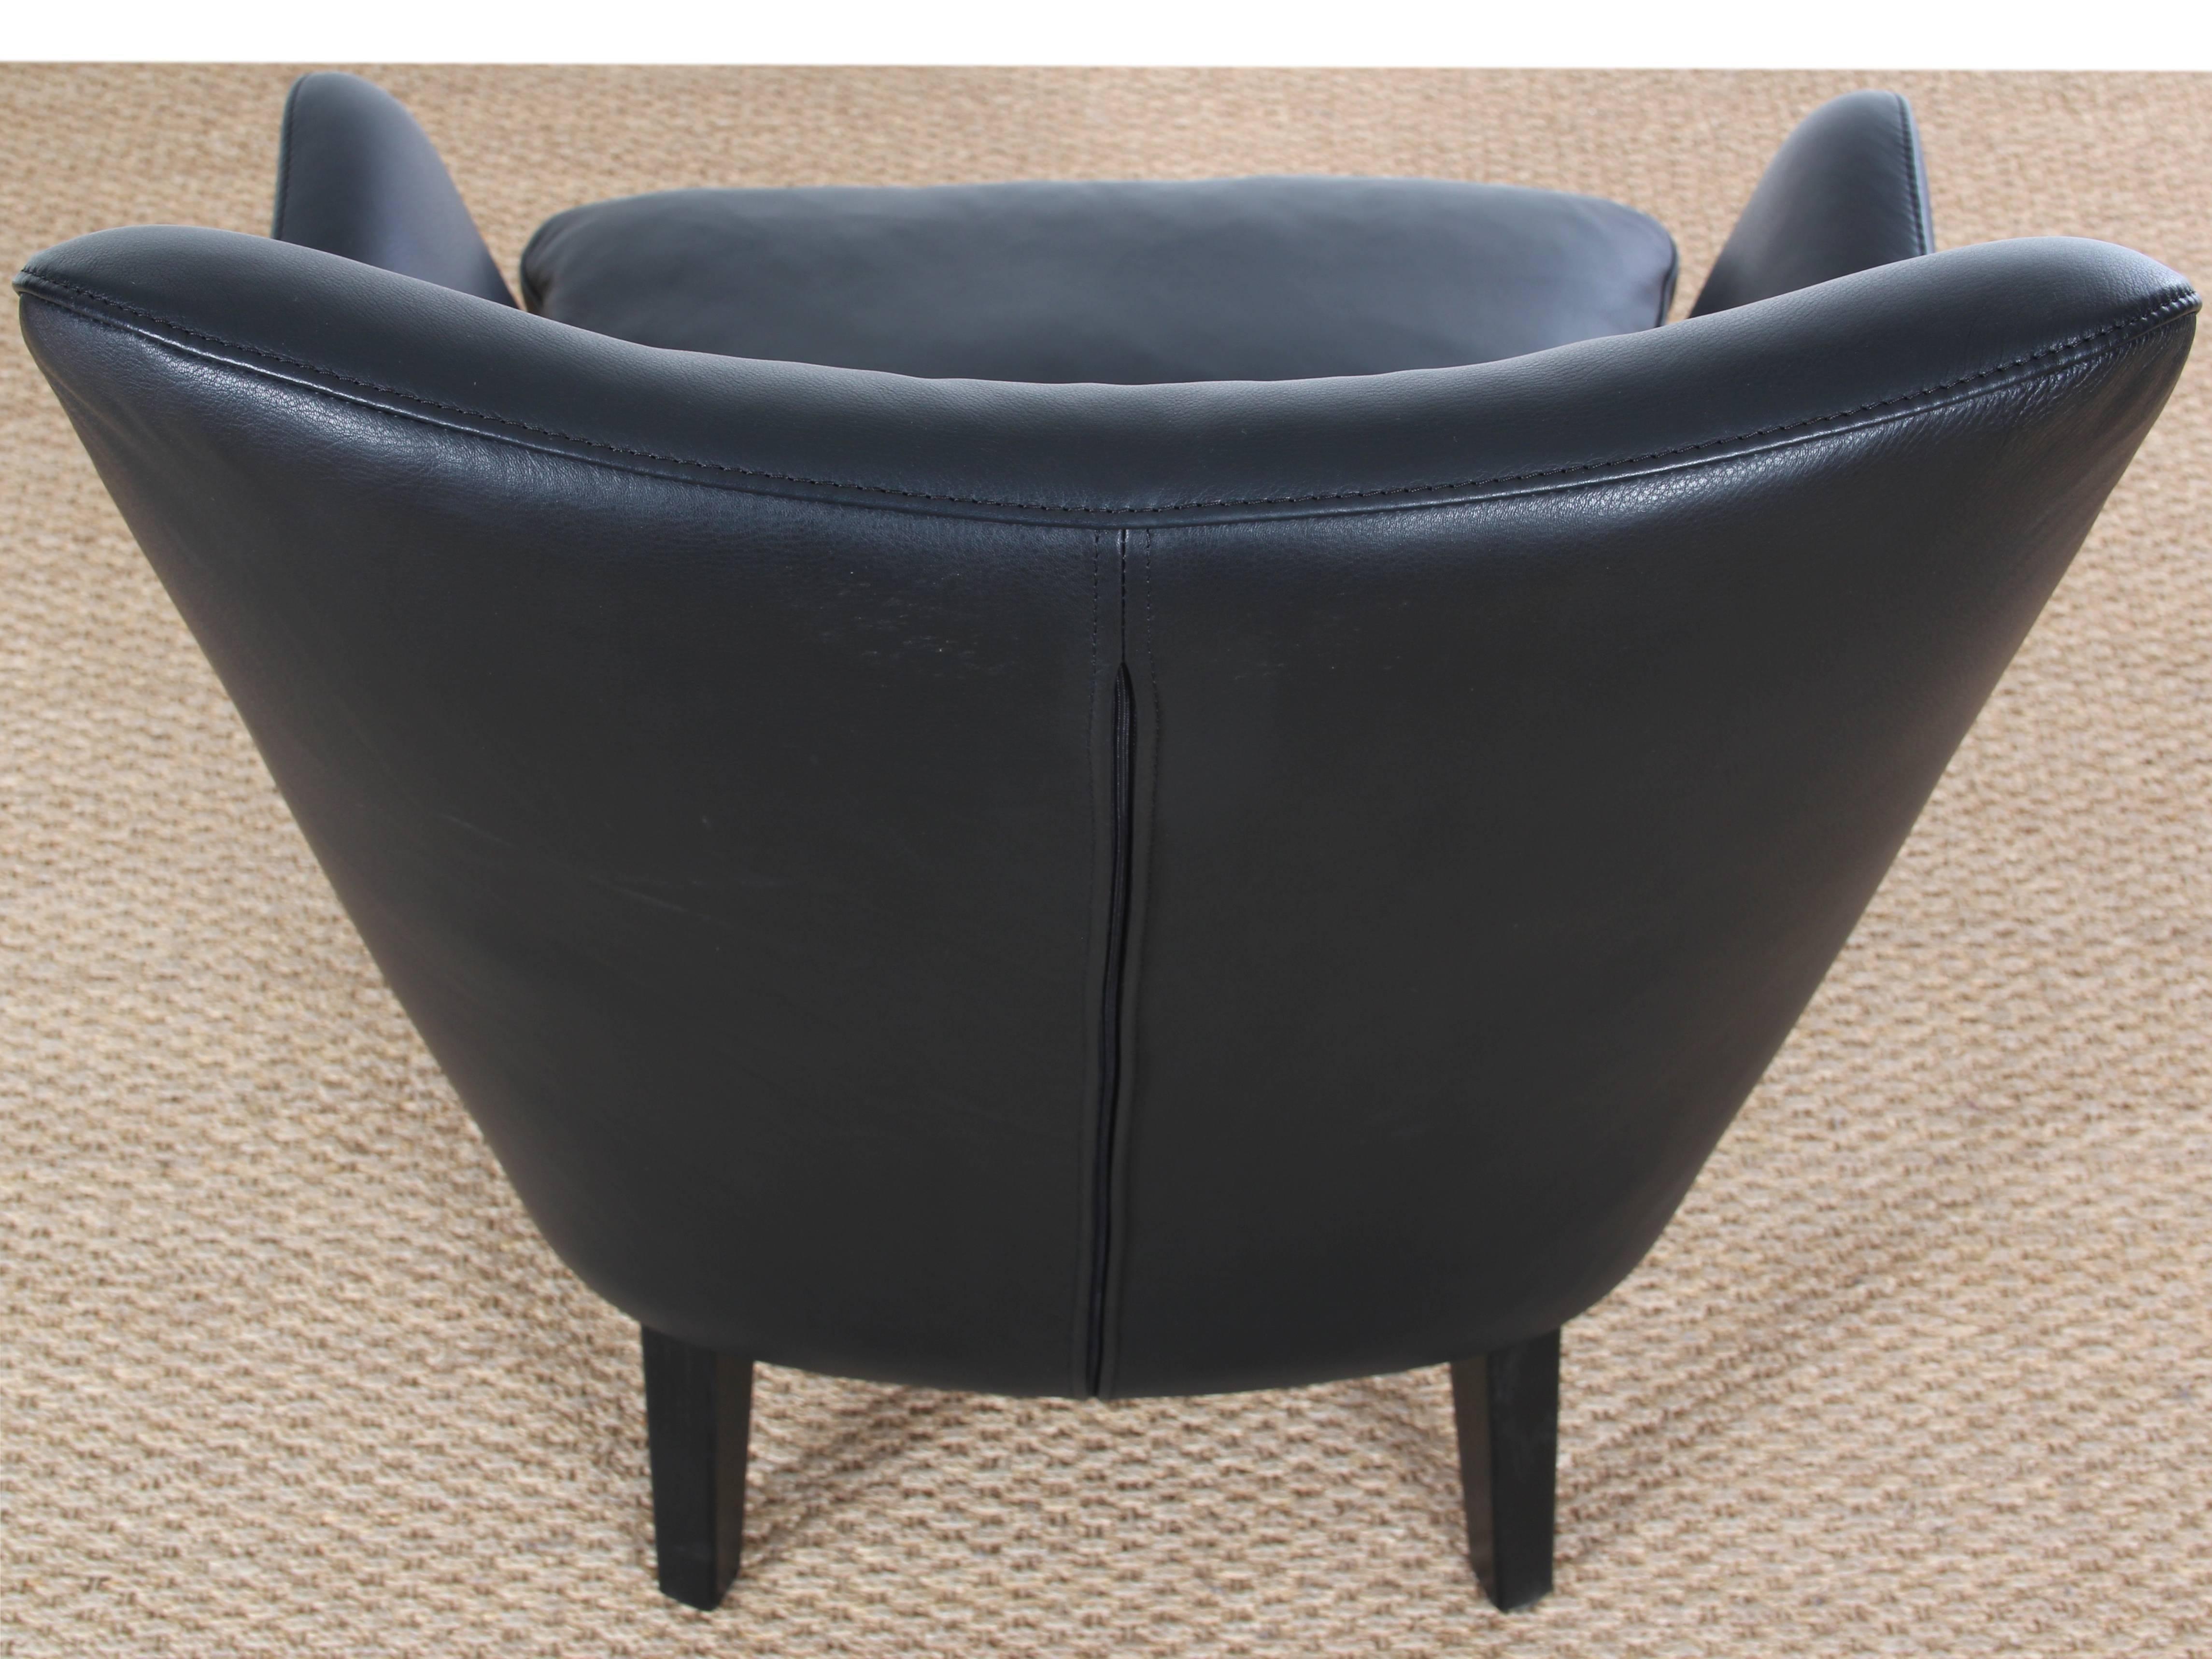 Contemporary Mid-Century Modern Scandinavian Lounge Chair by Arne Vodder AV 53 New Release For Sale